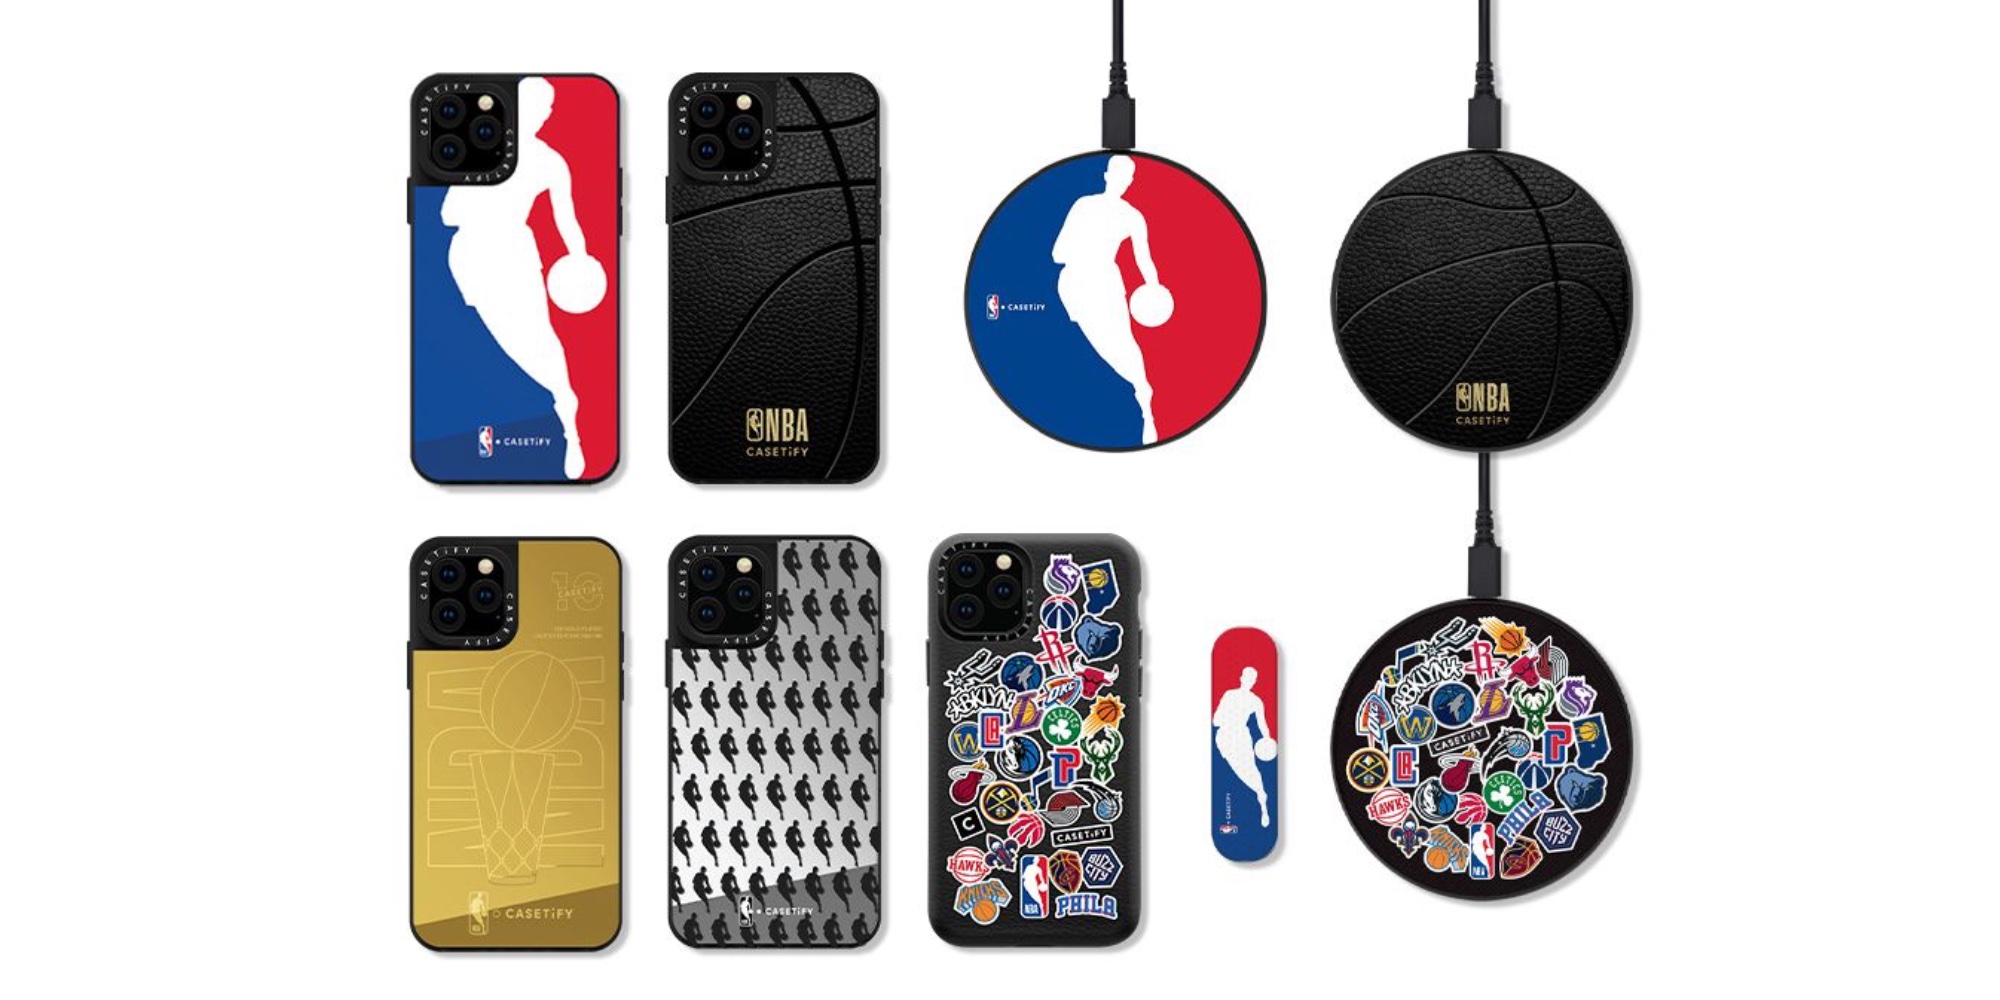 Casetify x NBA Basketball iPhone12/12Pro